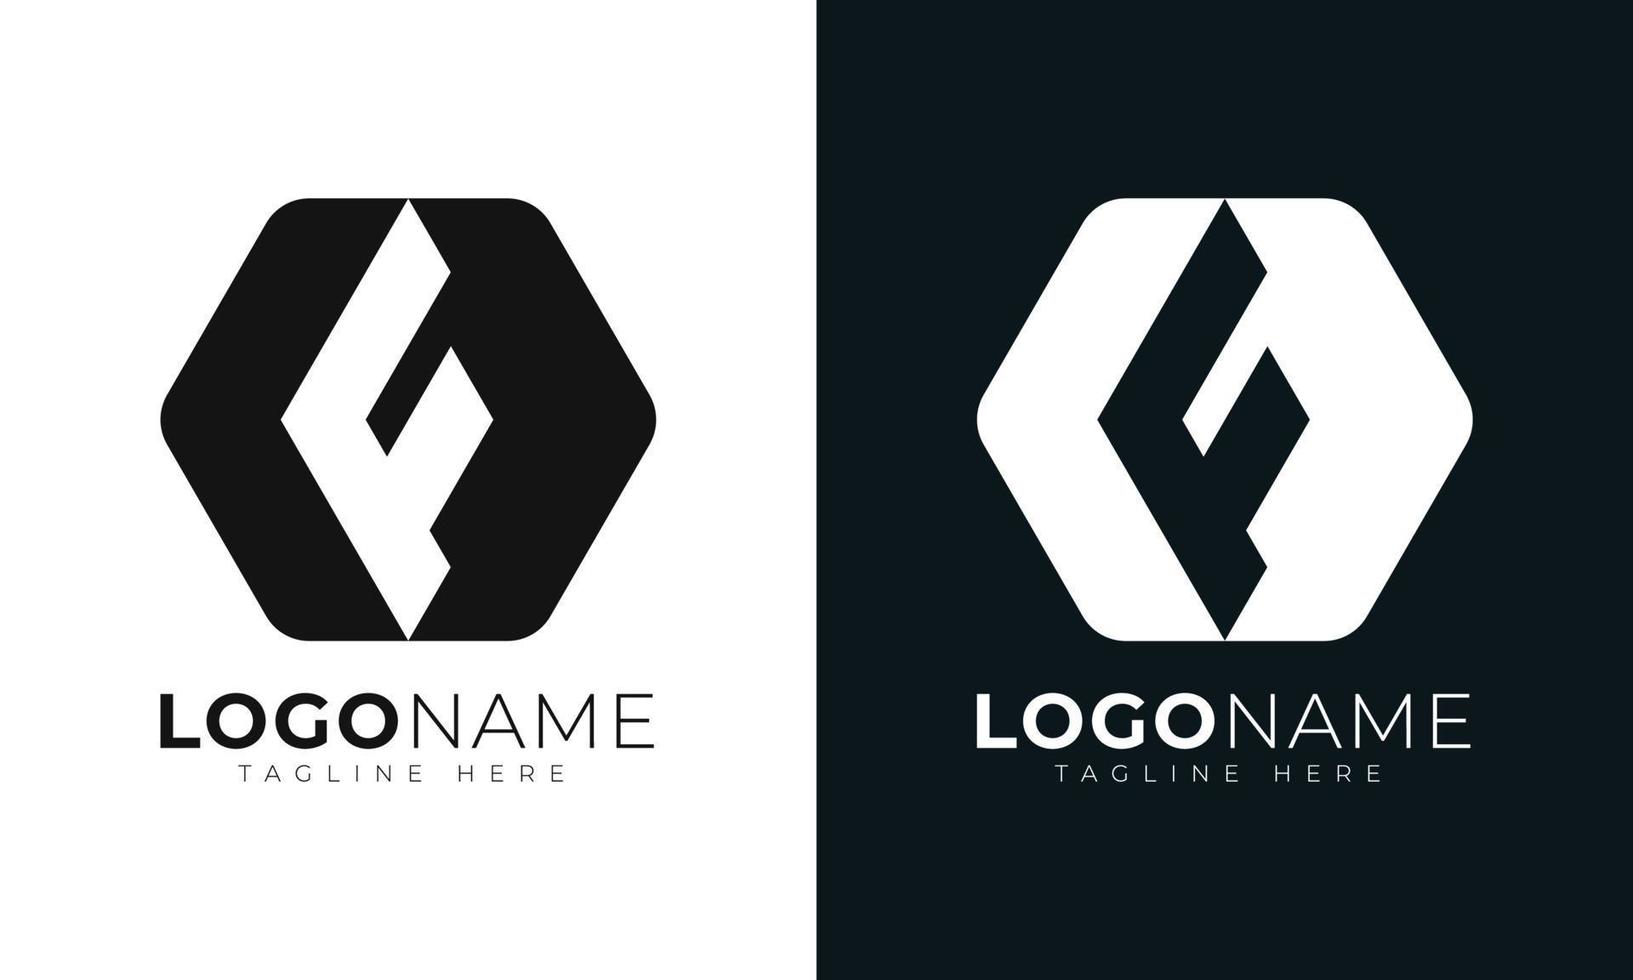 modelo de design de vetor de logotipo de letra inicial f. com formato hexagonal. estilo poligonal.